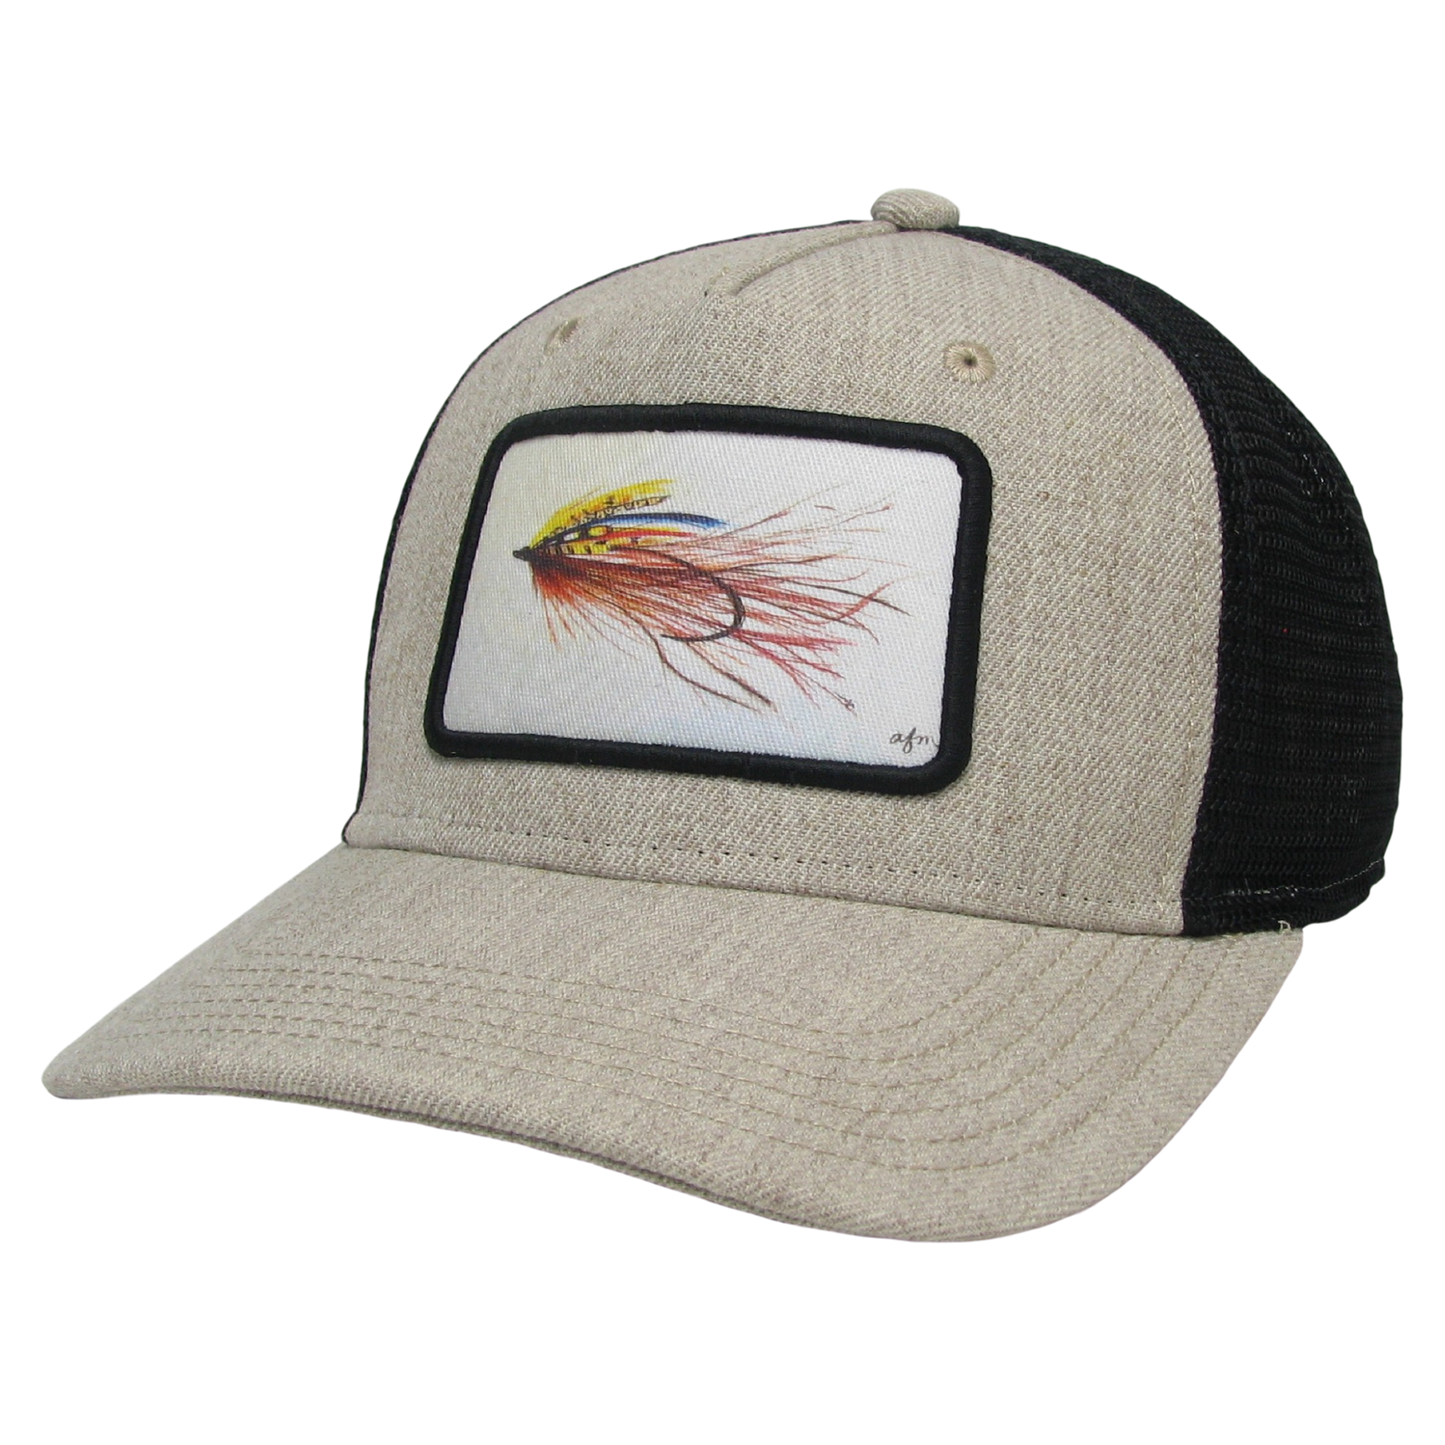 Streamer Fly Roadie Trucker Hat in Heather Tan/Black